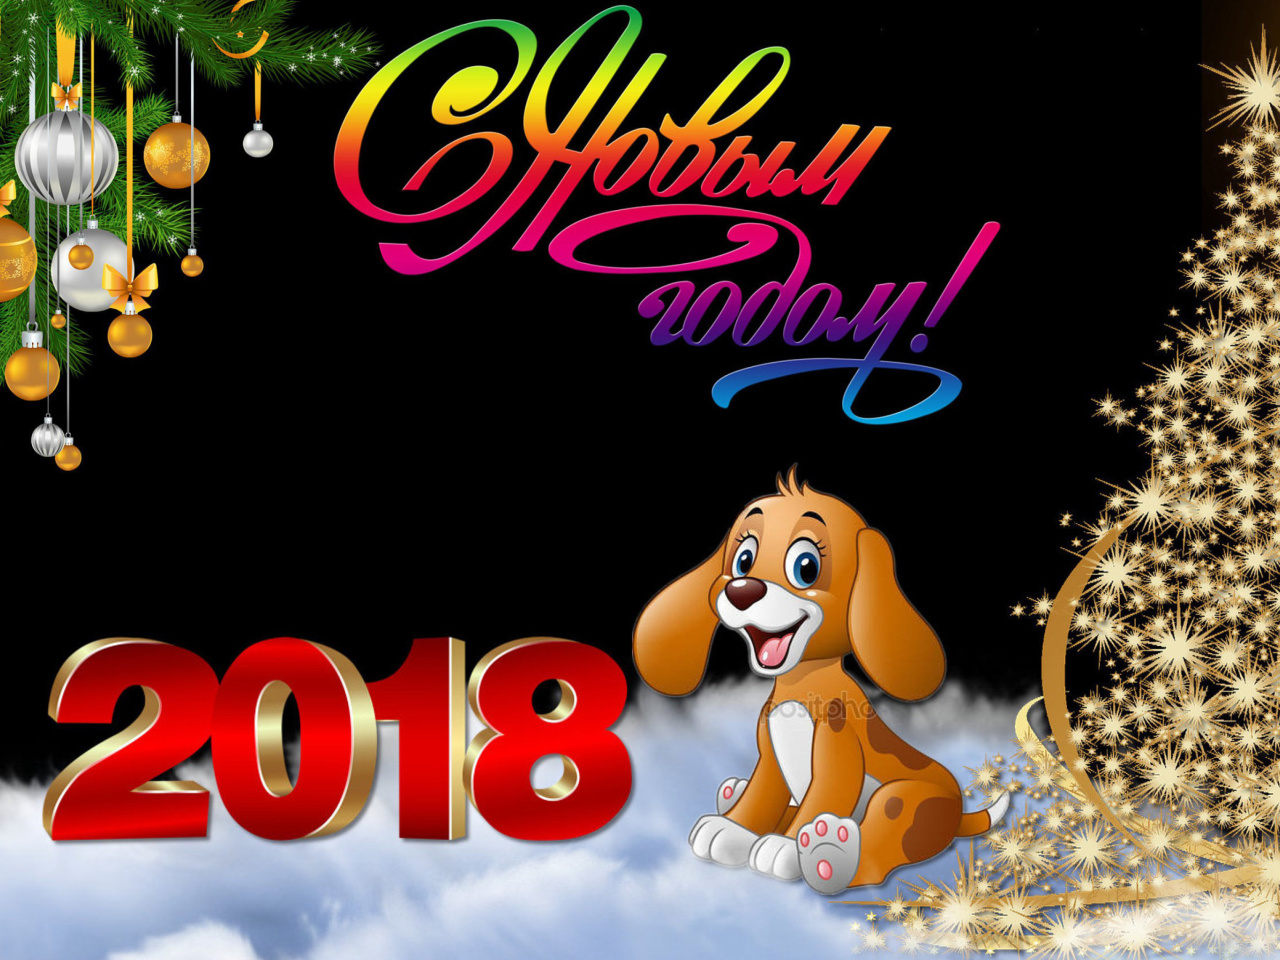 Happy New Year 2018 wallpaper 1280x960